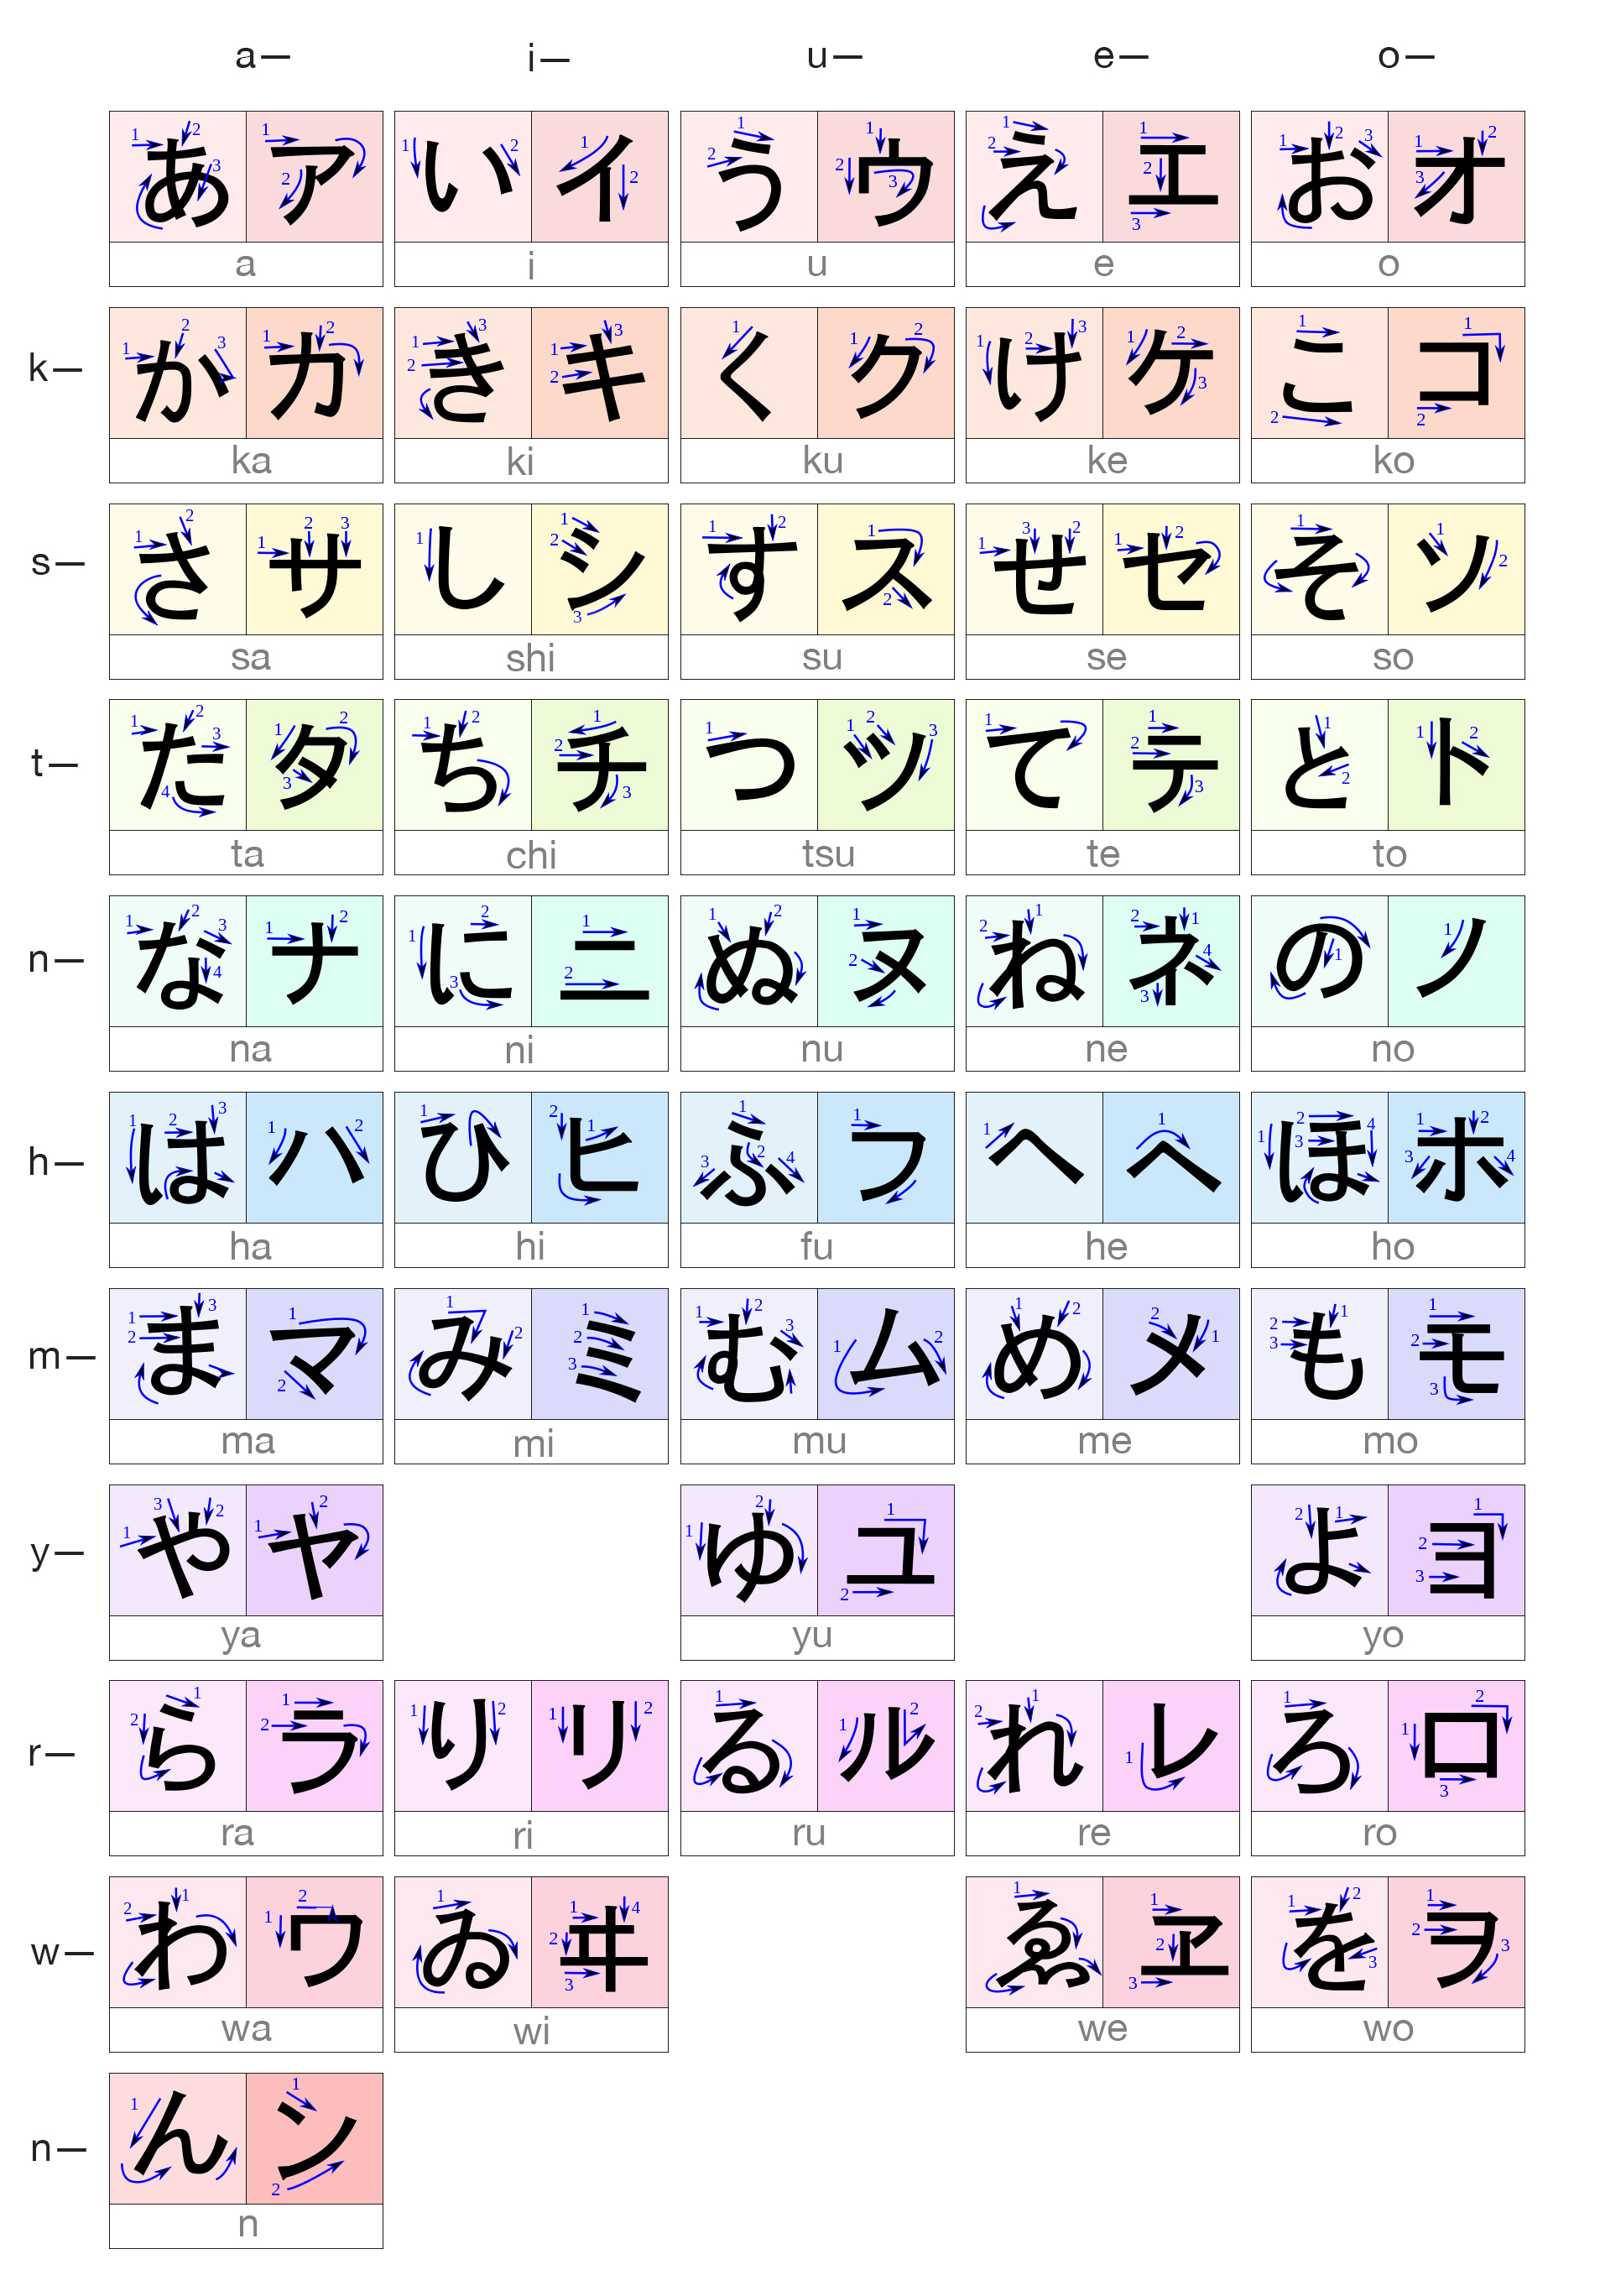 Hướng dẫn viết Katakana